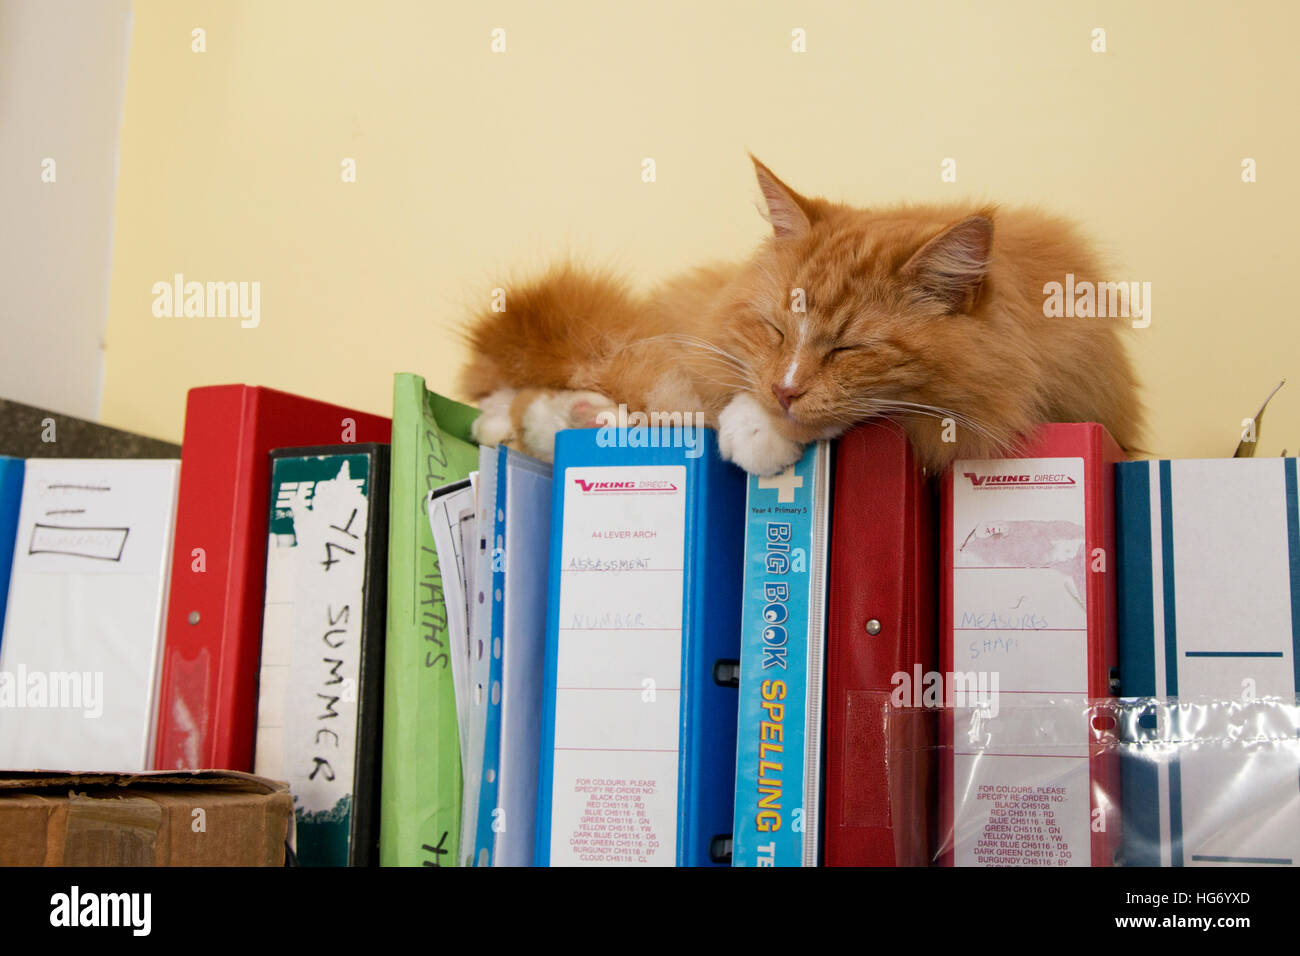 A ginger kitten/cat sleeps on top of box files. Stock Photo